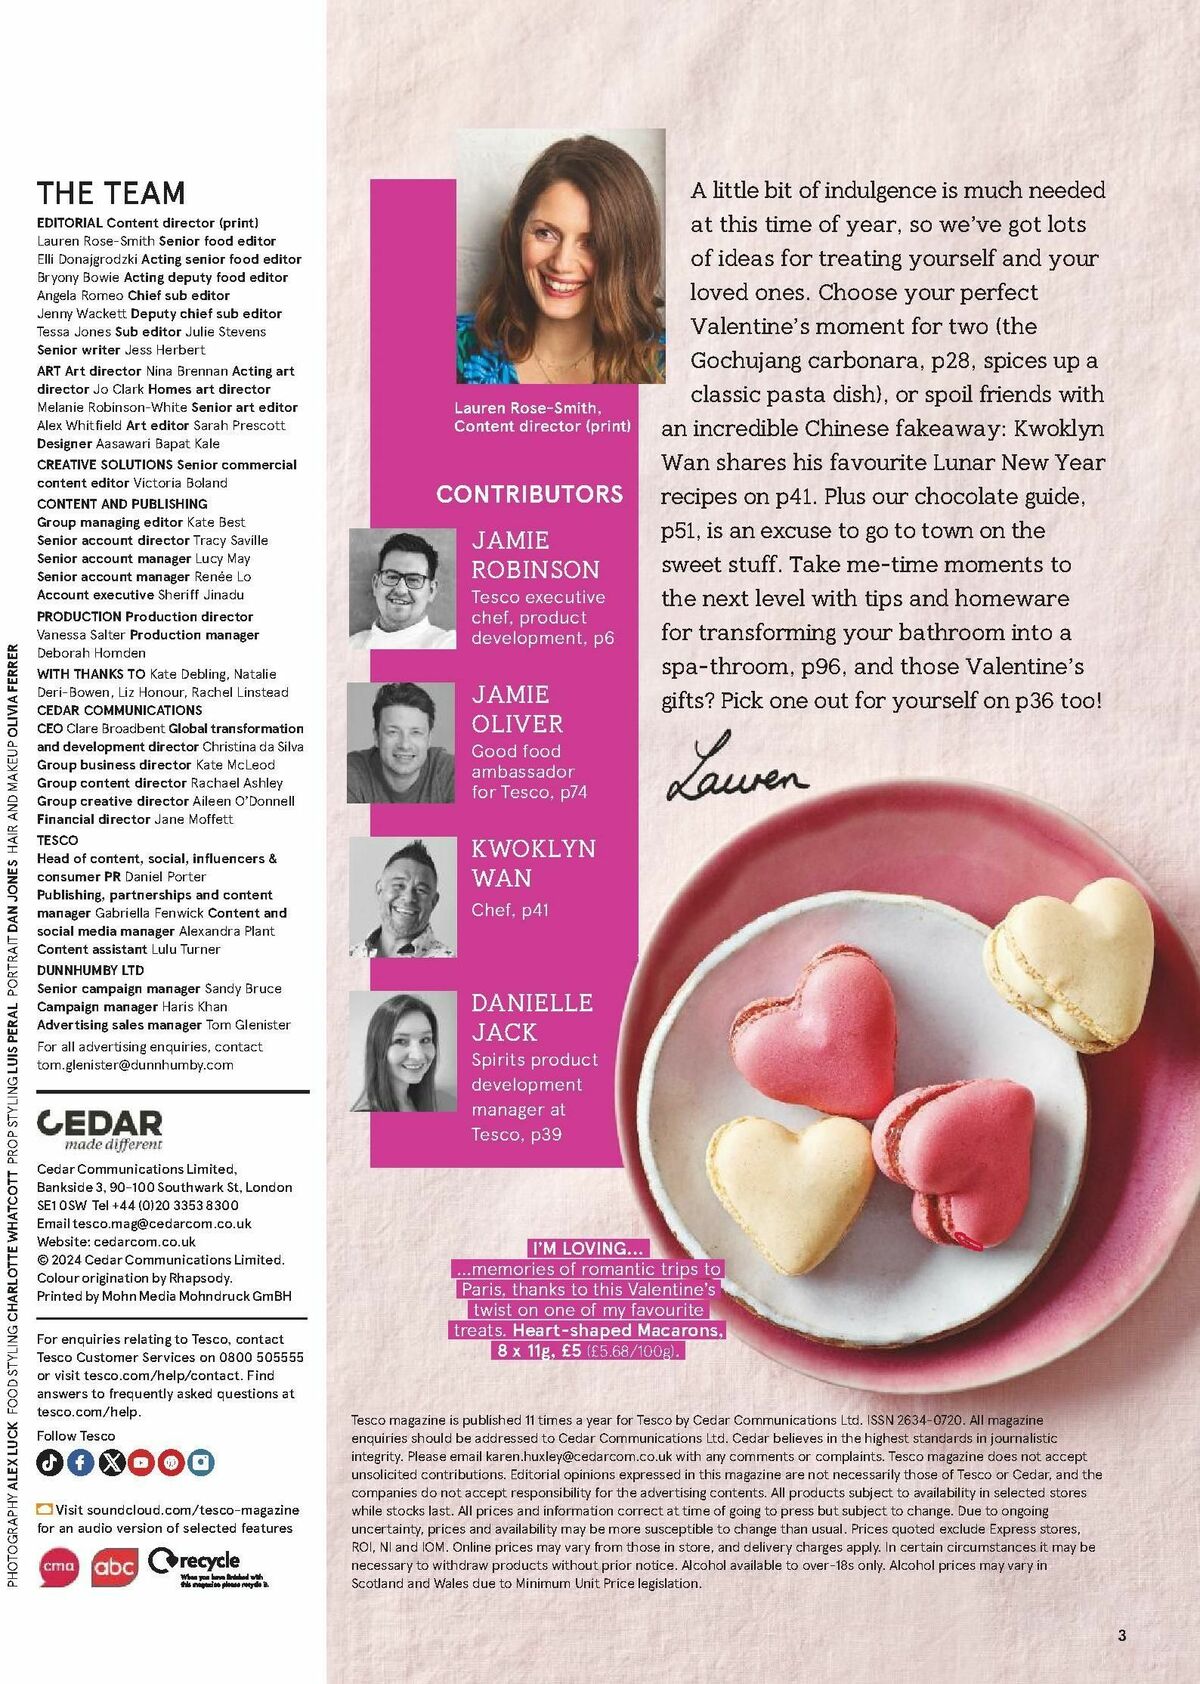 TESCO Magazine February Offers from 1 February